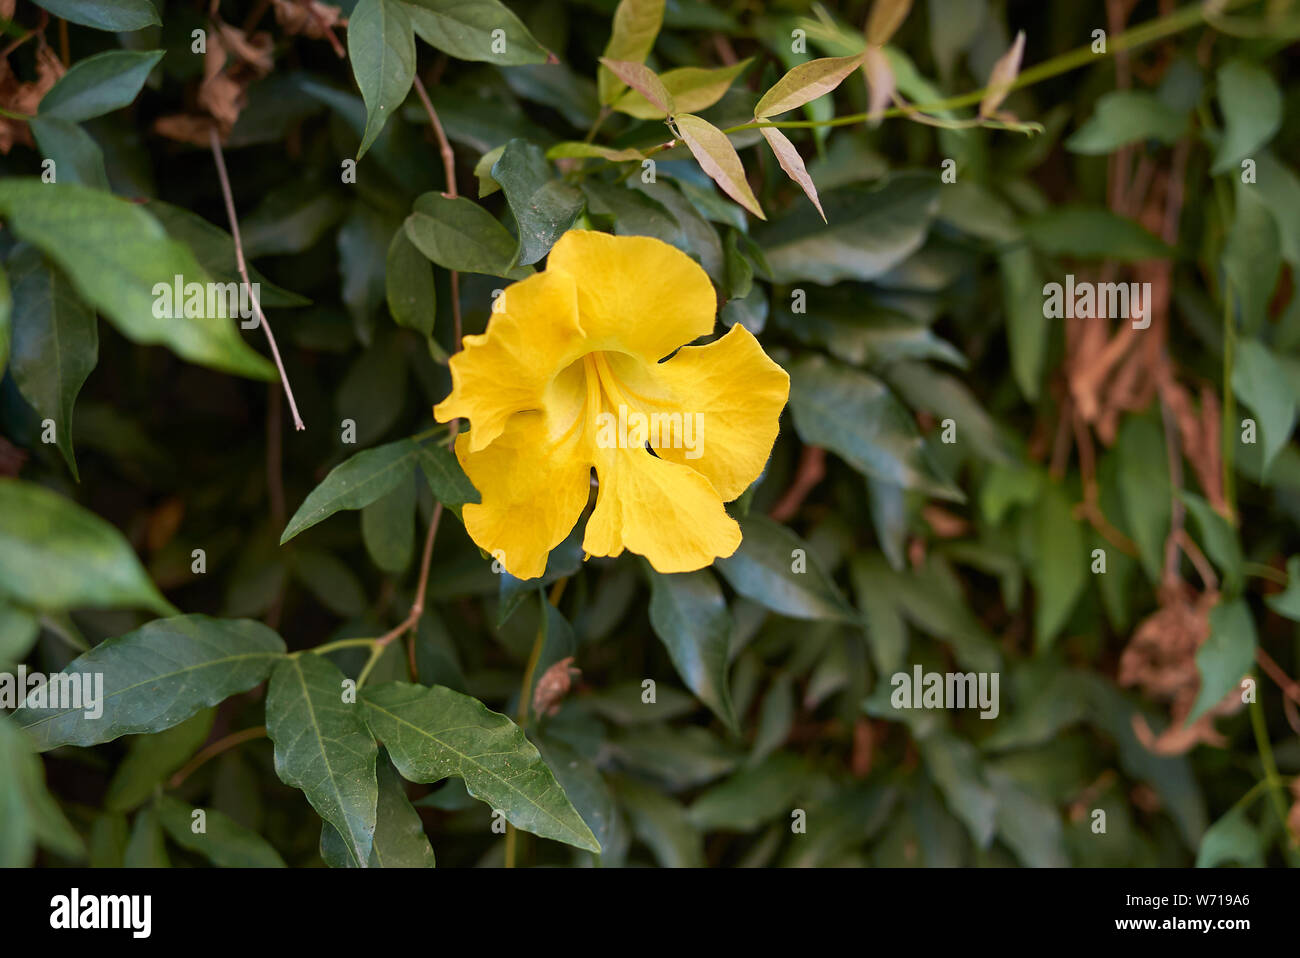 yellow flower of Dolichandra unguis-cati climber vine close up Stock Photo